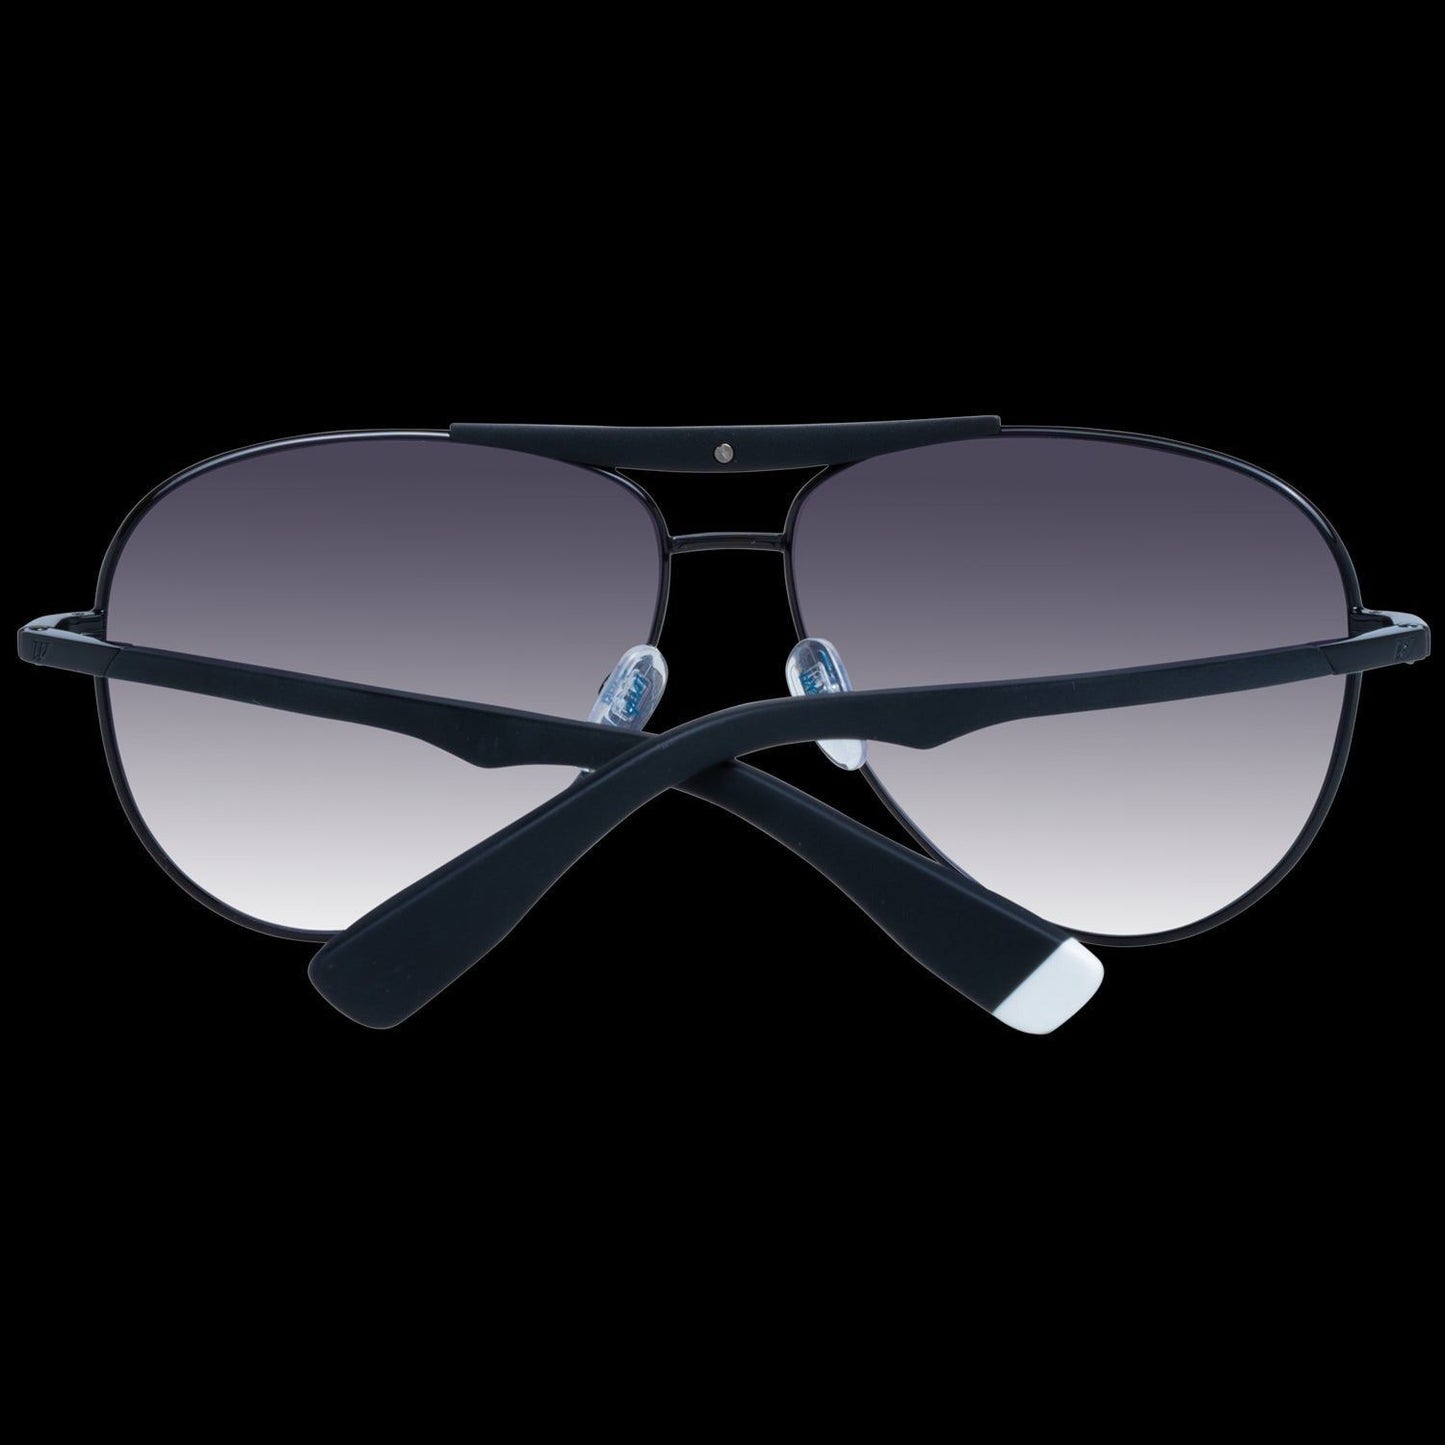 WEB EYEWEAR WEB SUNGLASSES SUNGLASSES & EYEWEAR web-sunglasses-4